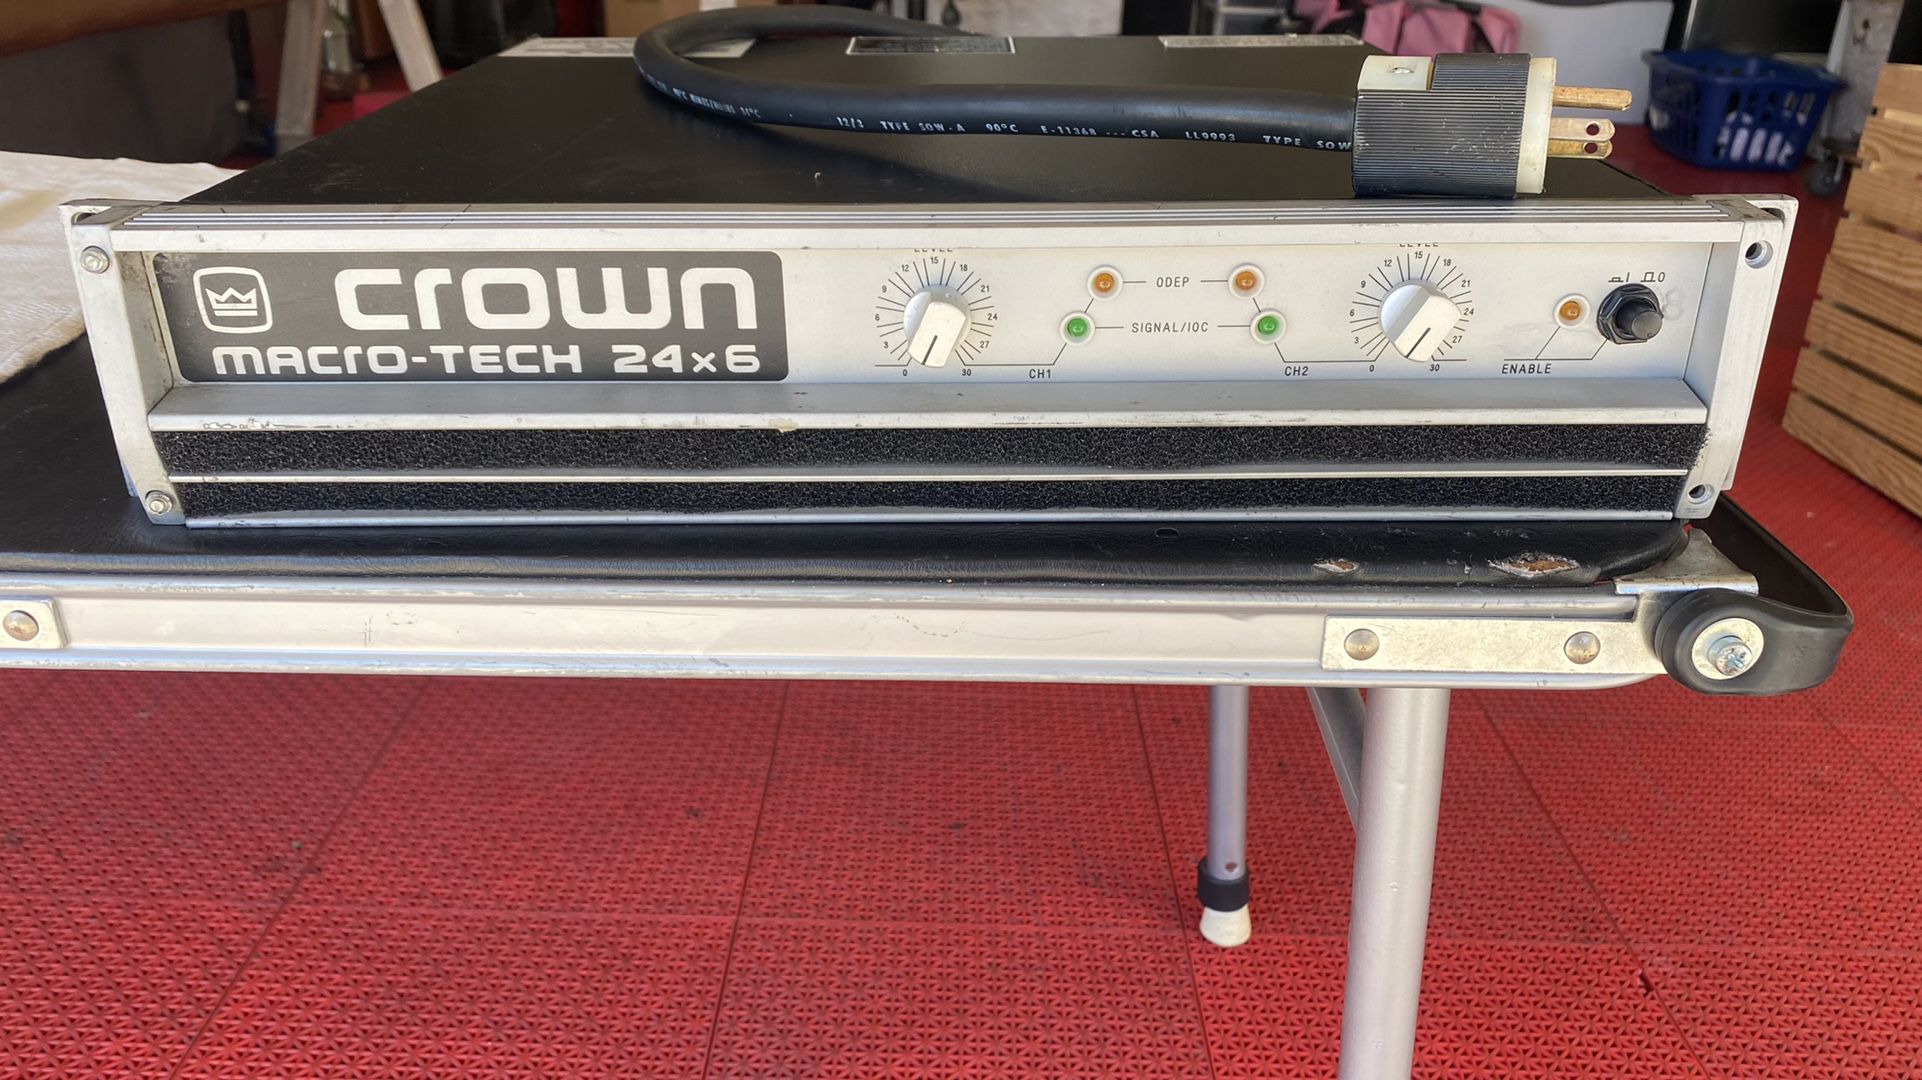 Crown Macro Tech 24/6 3000 watts  Professional Power Amplifier DJ Equipments  $325